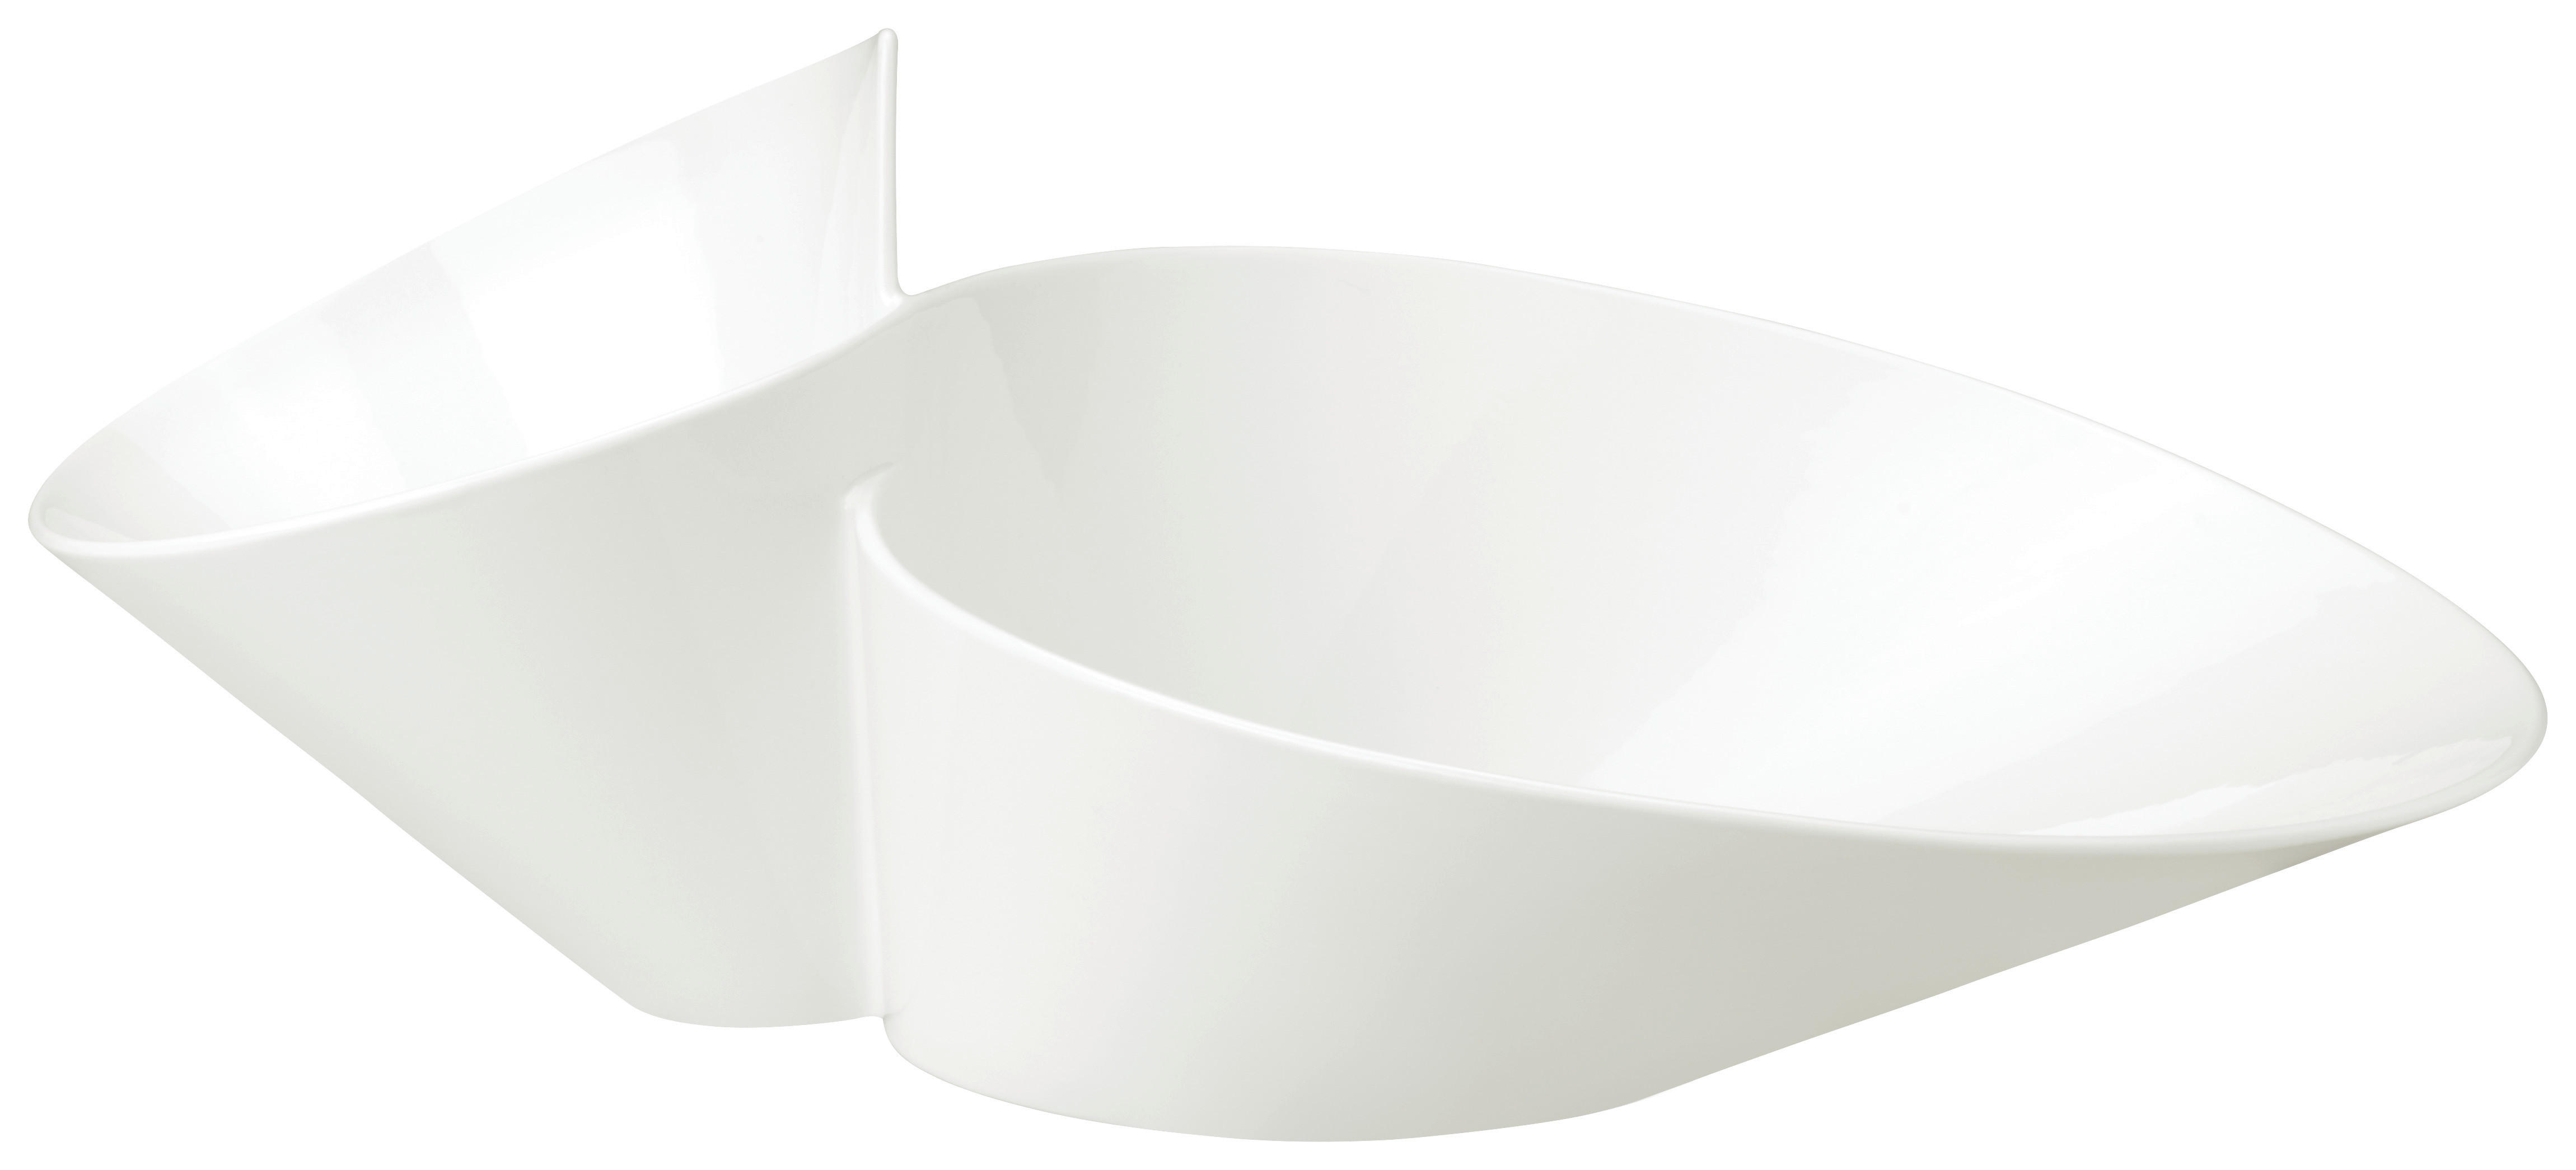 SCHALE Keramik Fine China  - Weiß, Basics, Keramik (27/49cm) - Villeroy & Boch